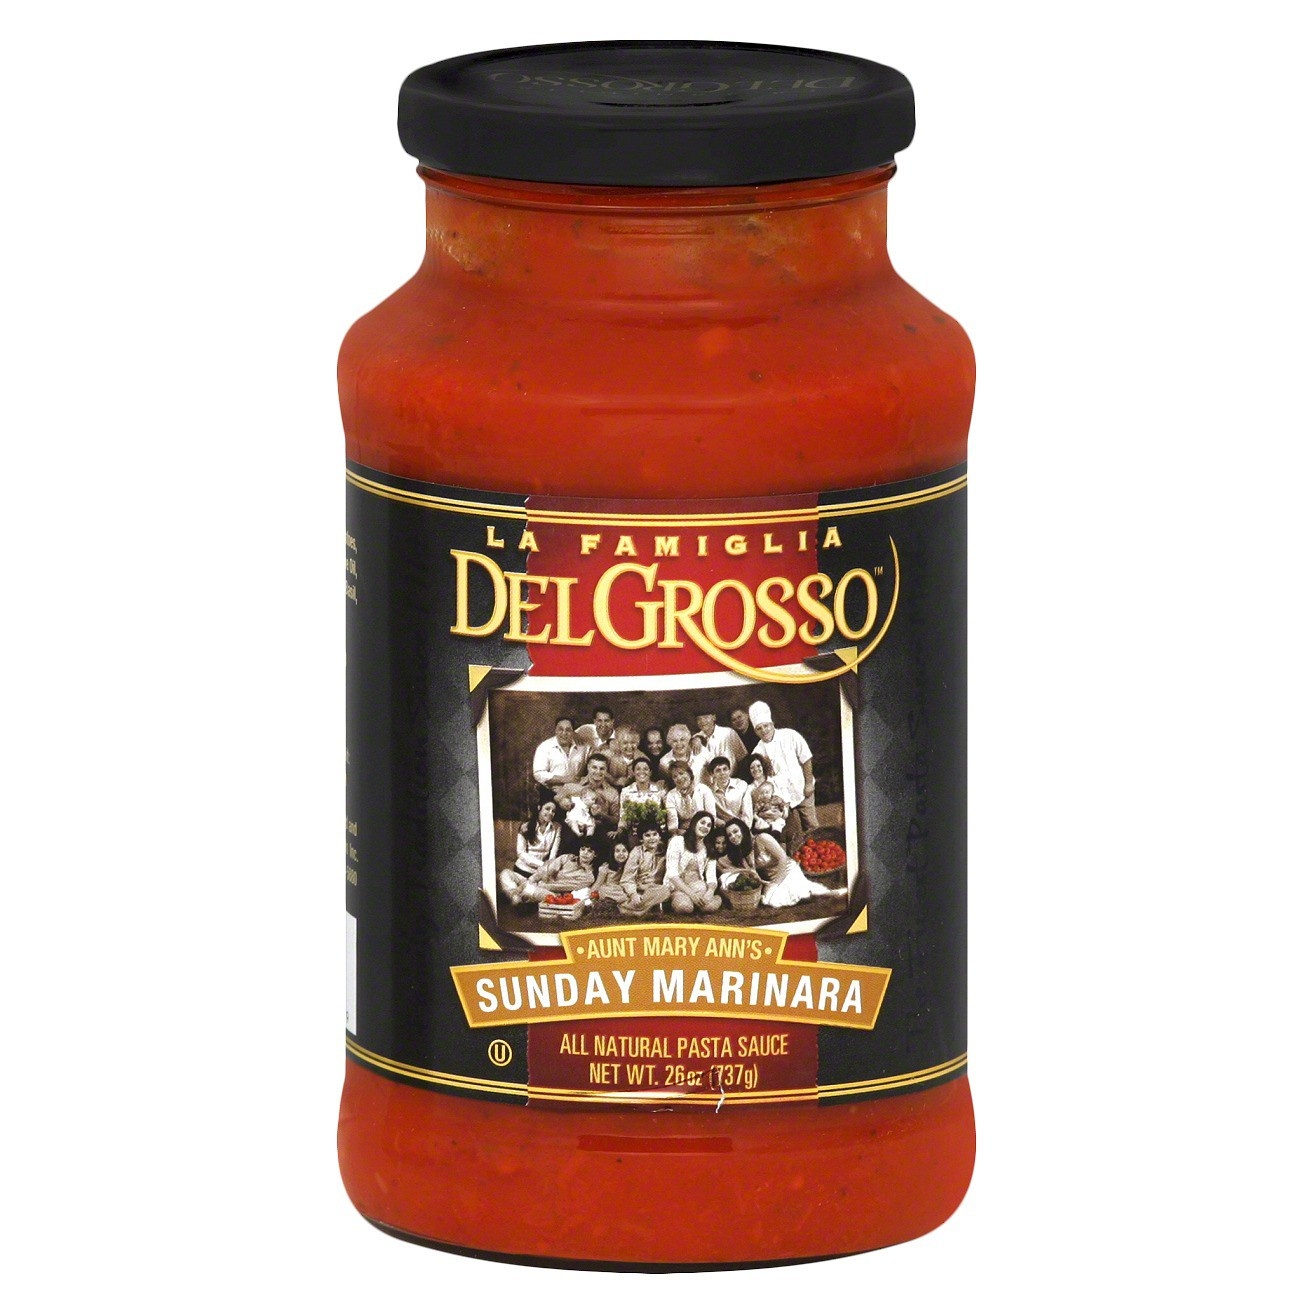 DelGrosso Aunt Mary Ann's Sunday Marinara UltraPremium Pasta Sauce 26